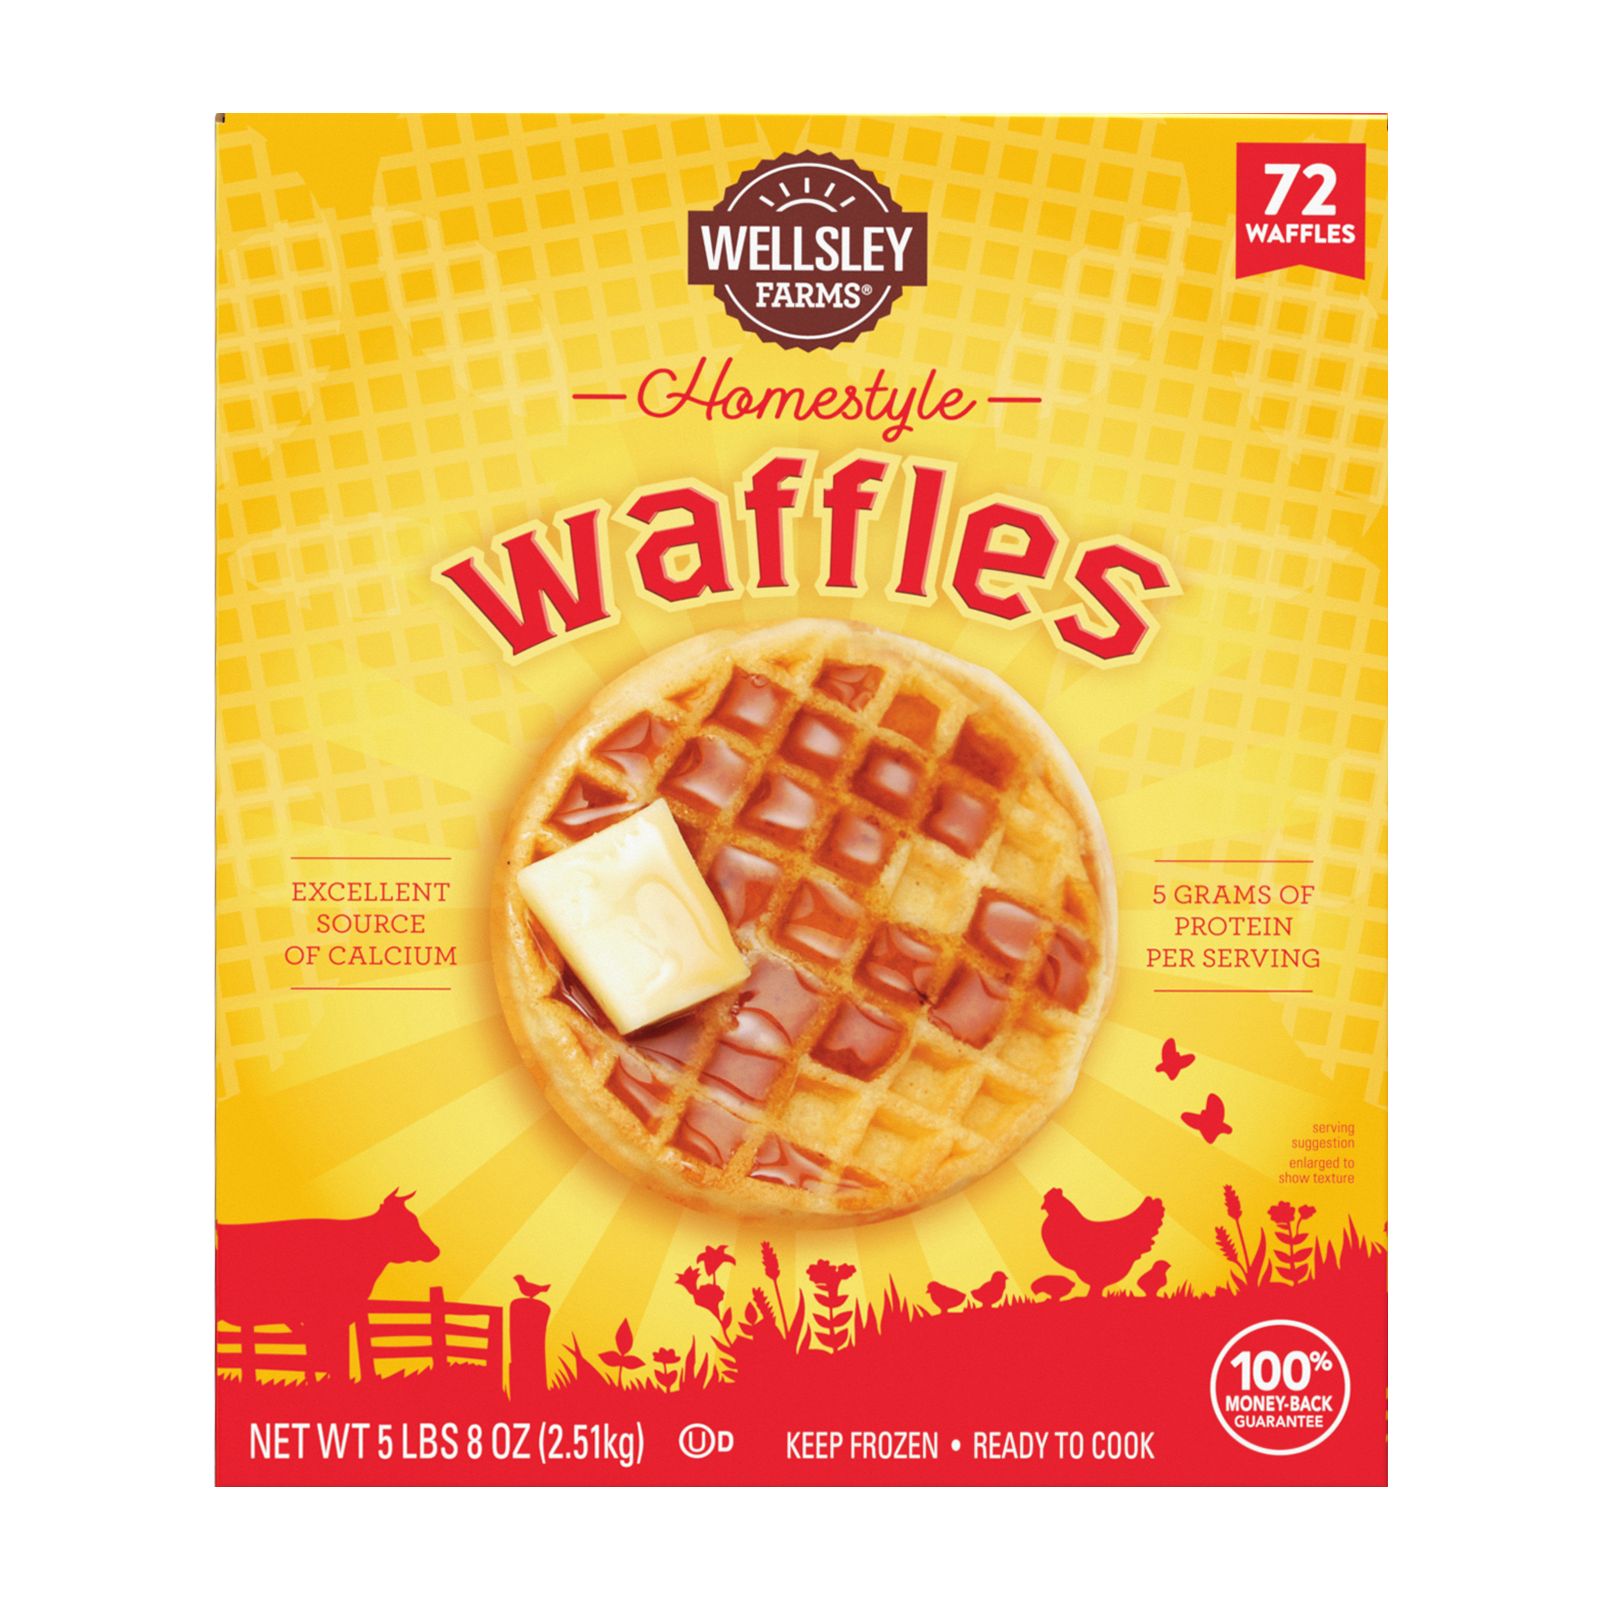 Wellsley Farms Homestyle Waffles, 72 ct. | BJ's Wholesale Club